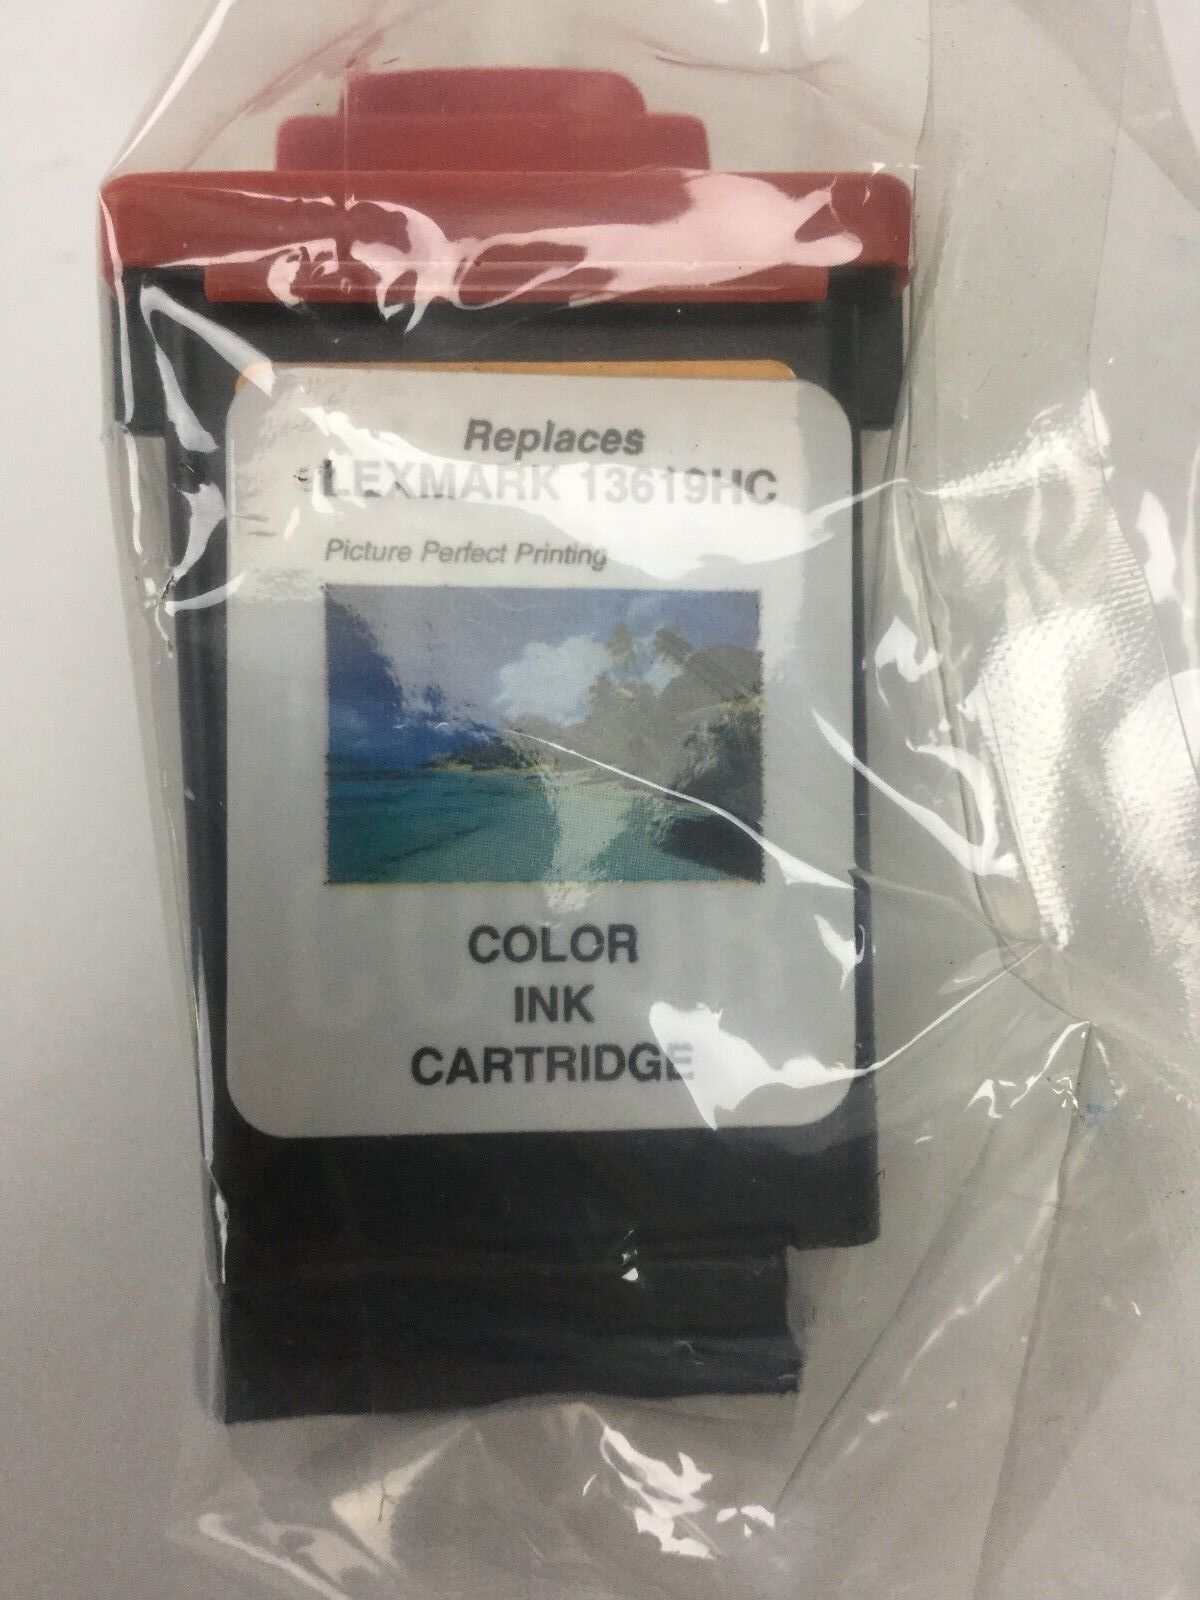 Color Ink Cartridge for 13619HC Lexmark